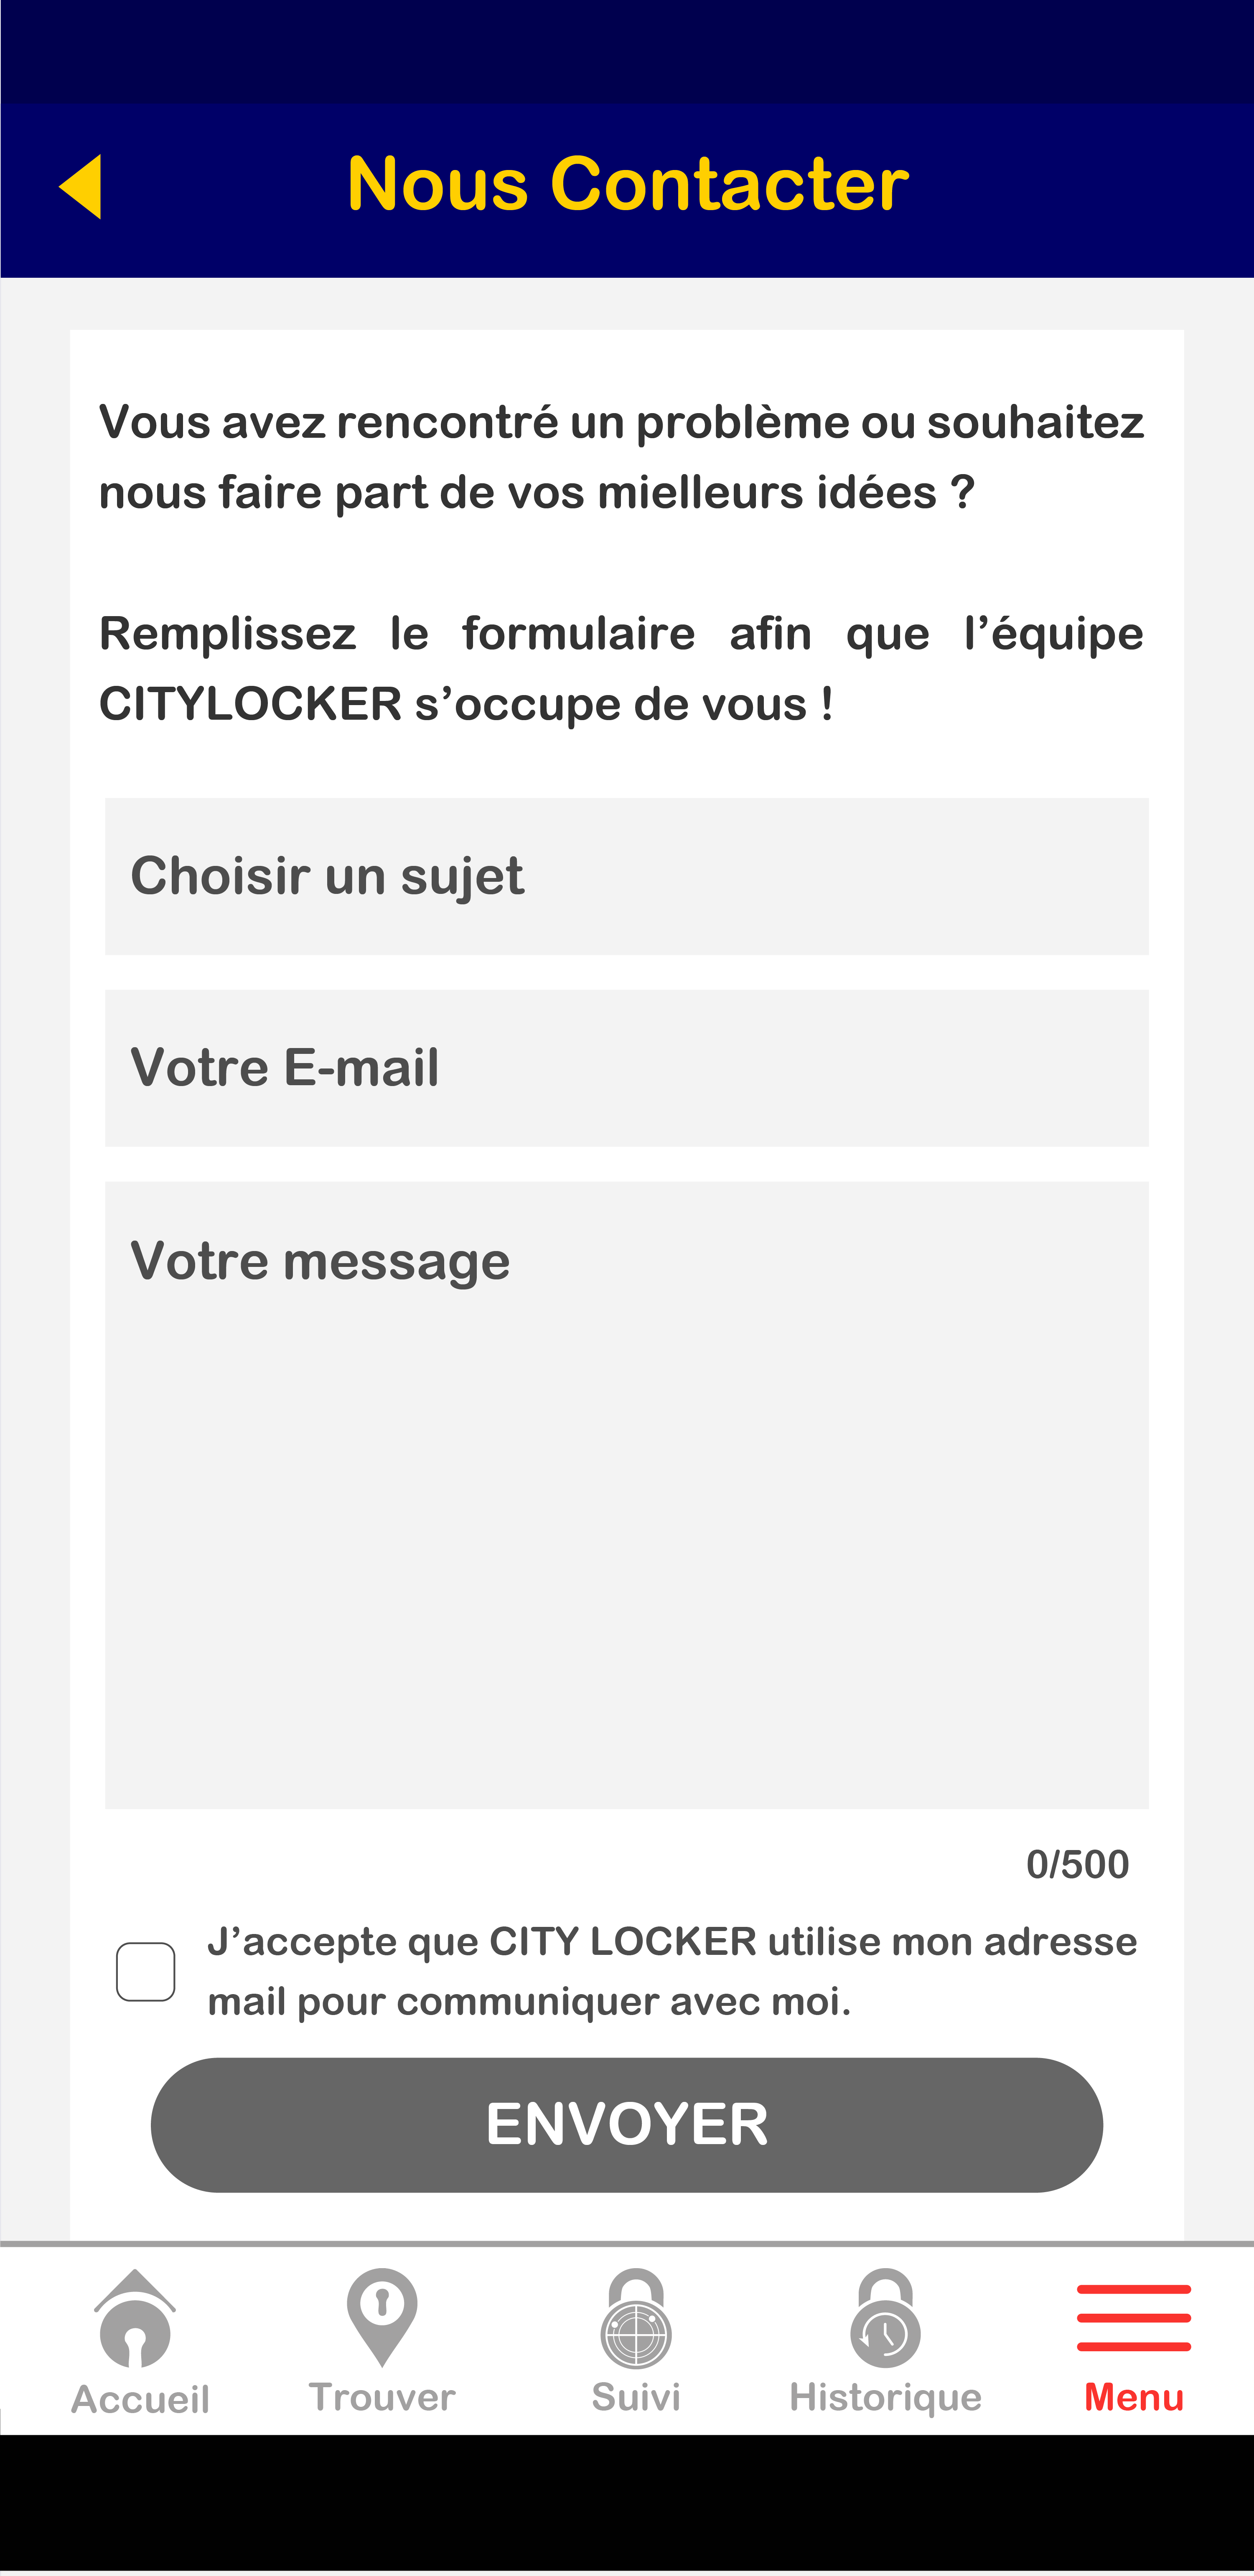 citylocker App screen